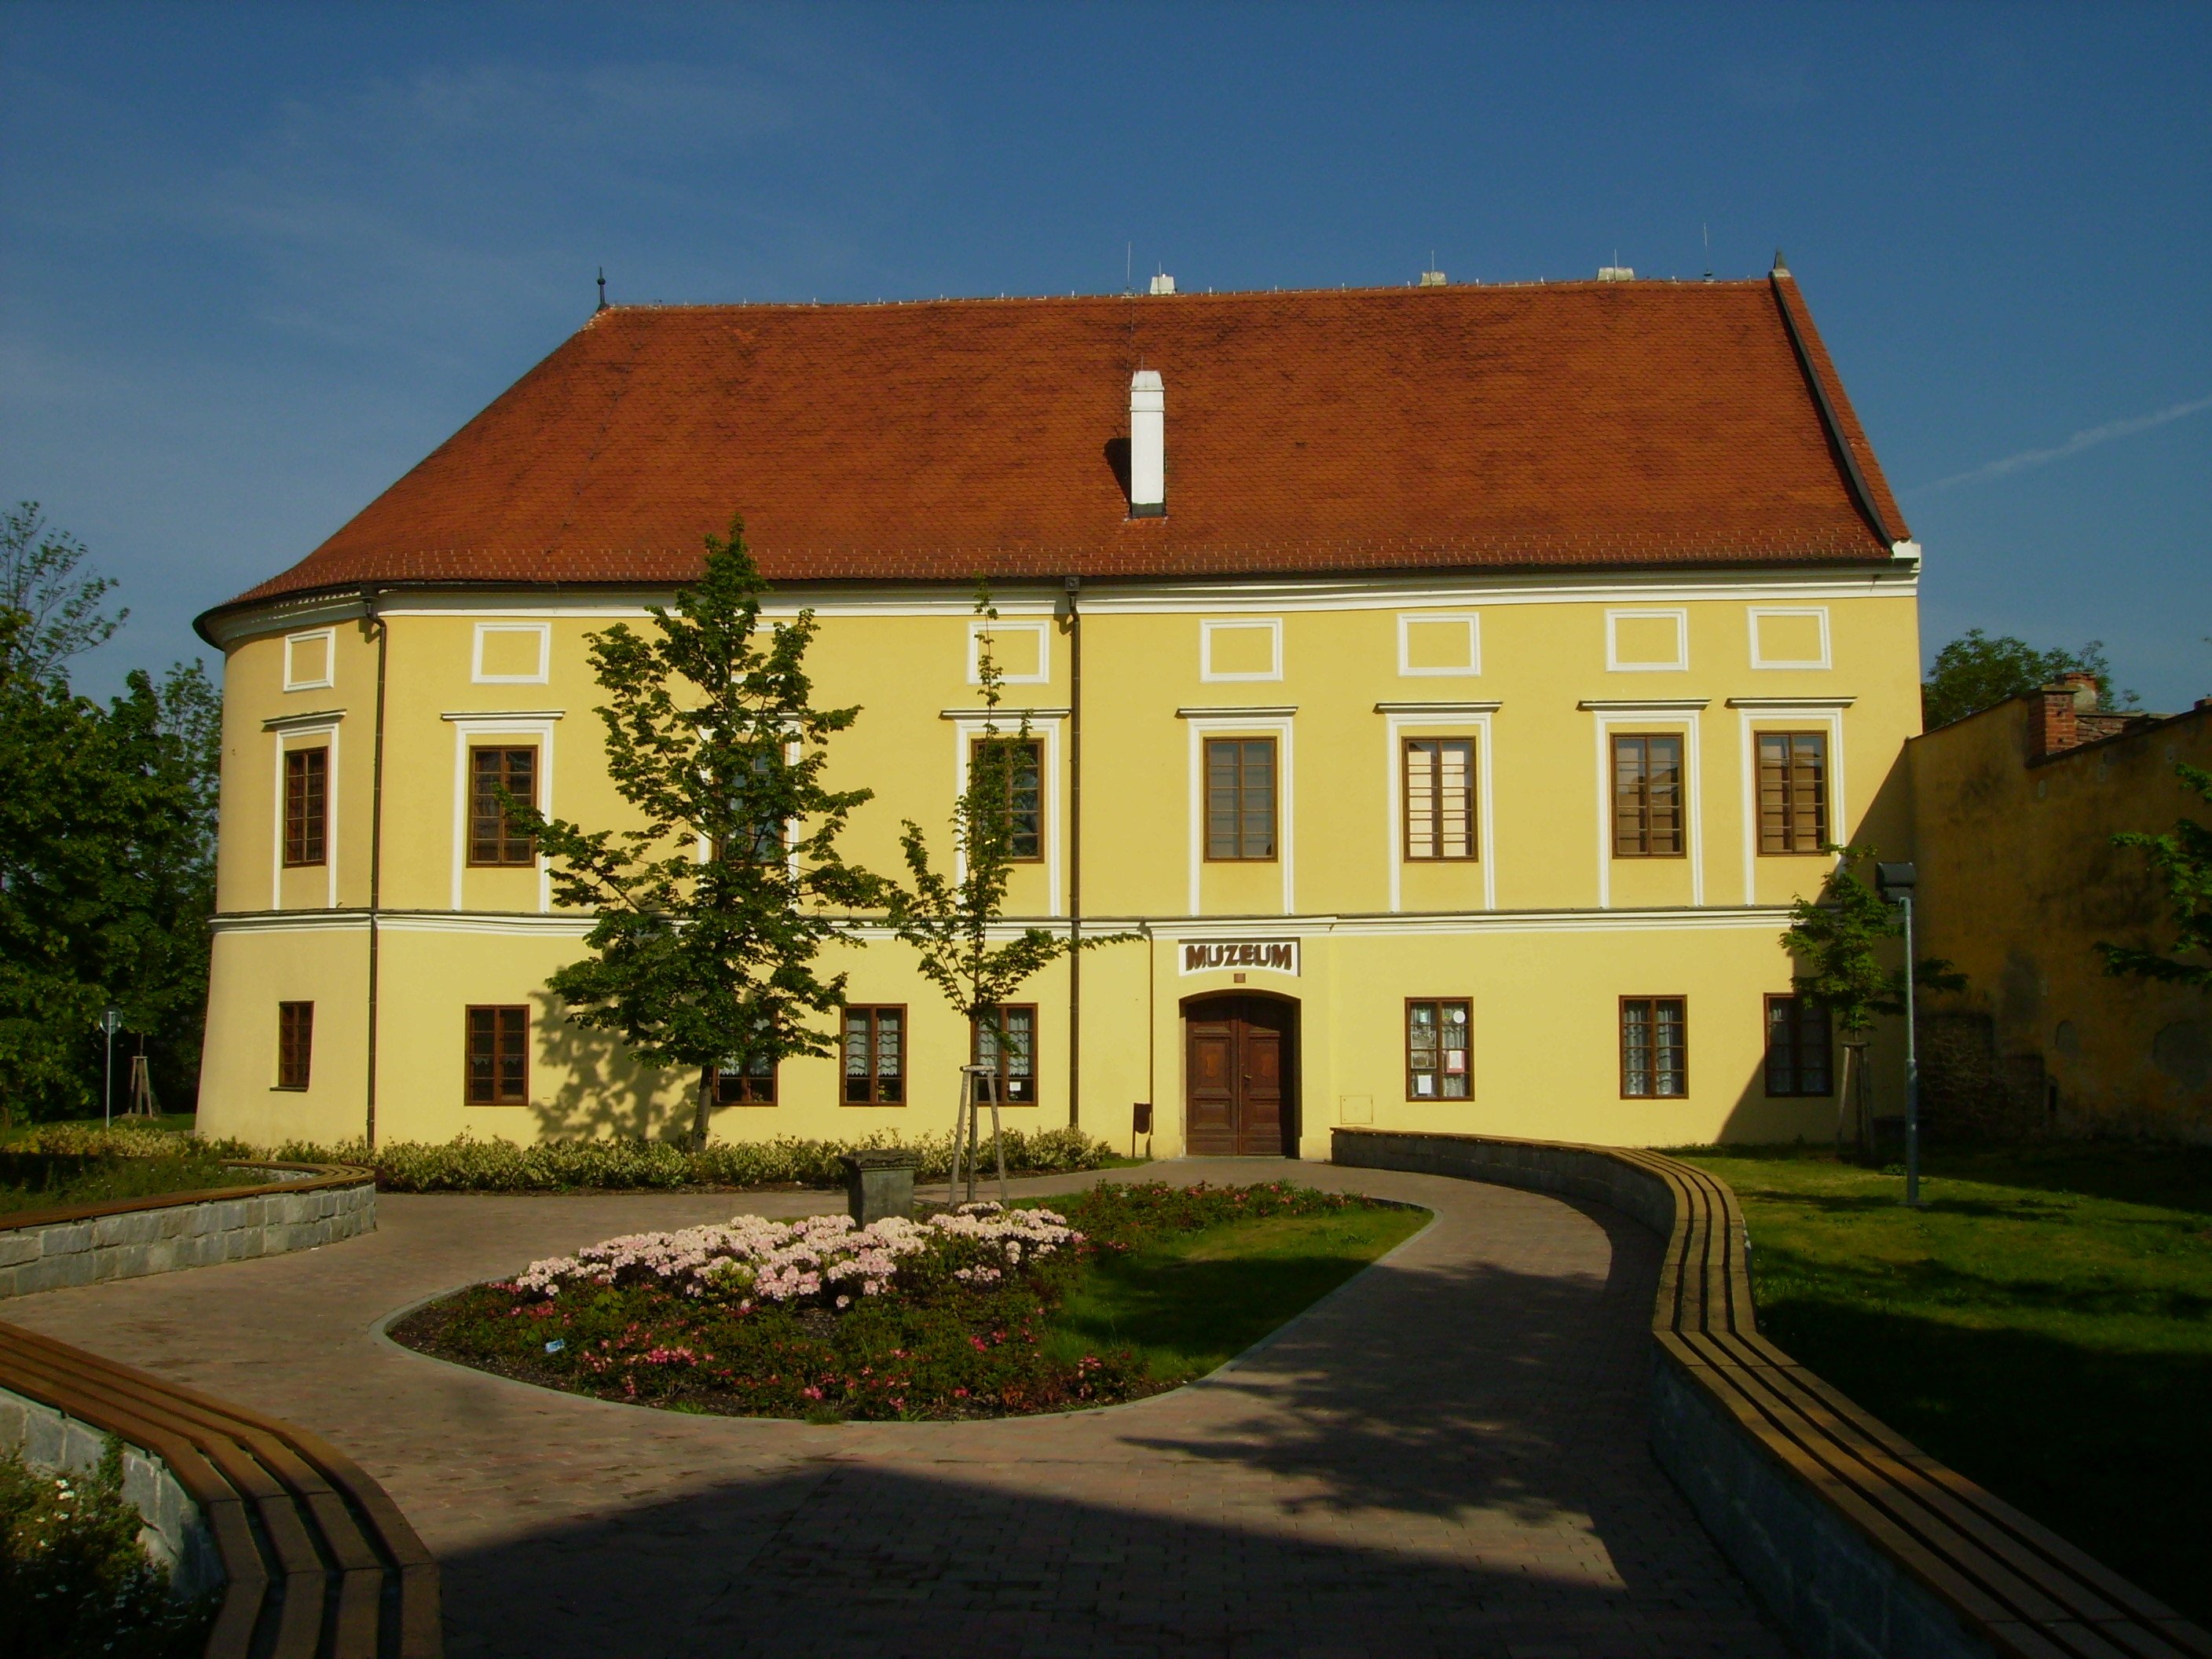 Muzeum Litovel